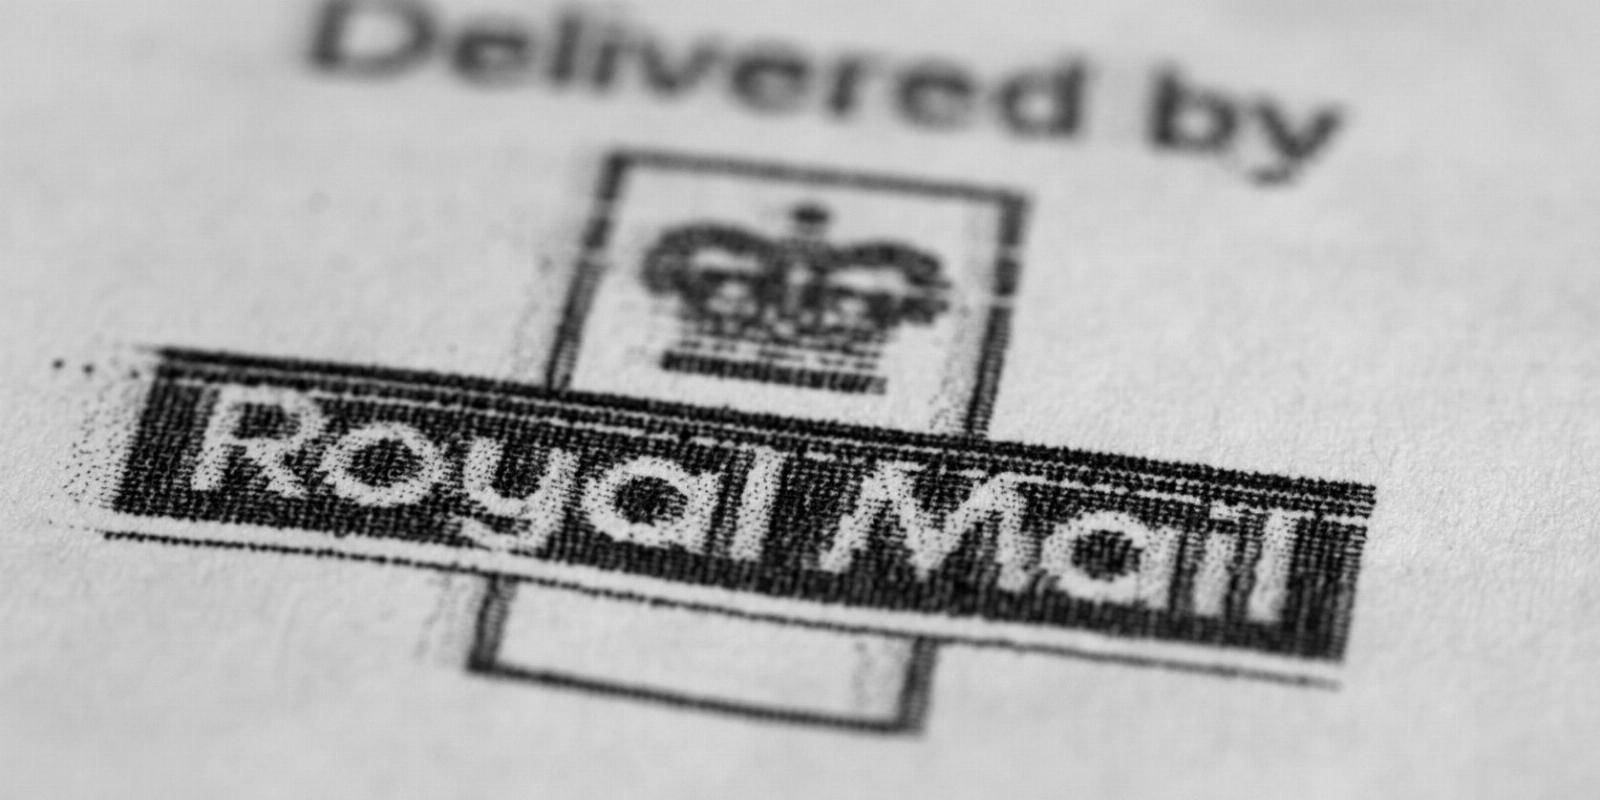 LockBit Ransomware Gang Claims Royal Mail Attack